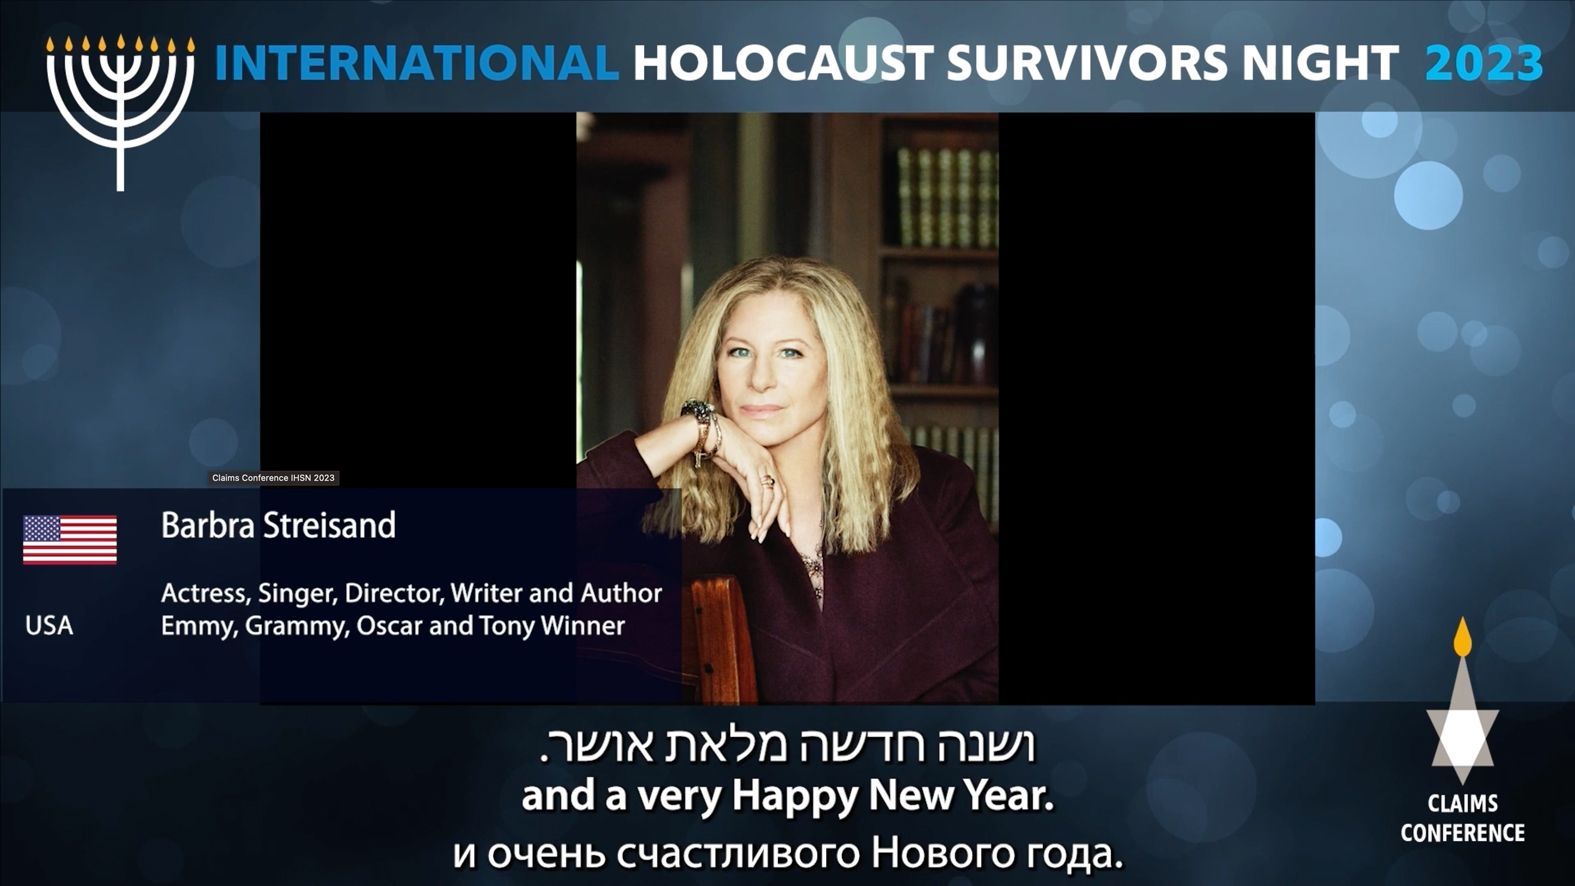 Streisand's screen capture for International Holocaust Survivors Night 2023.